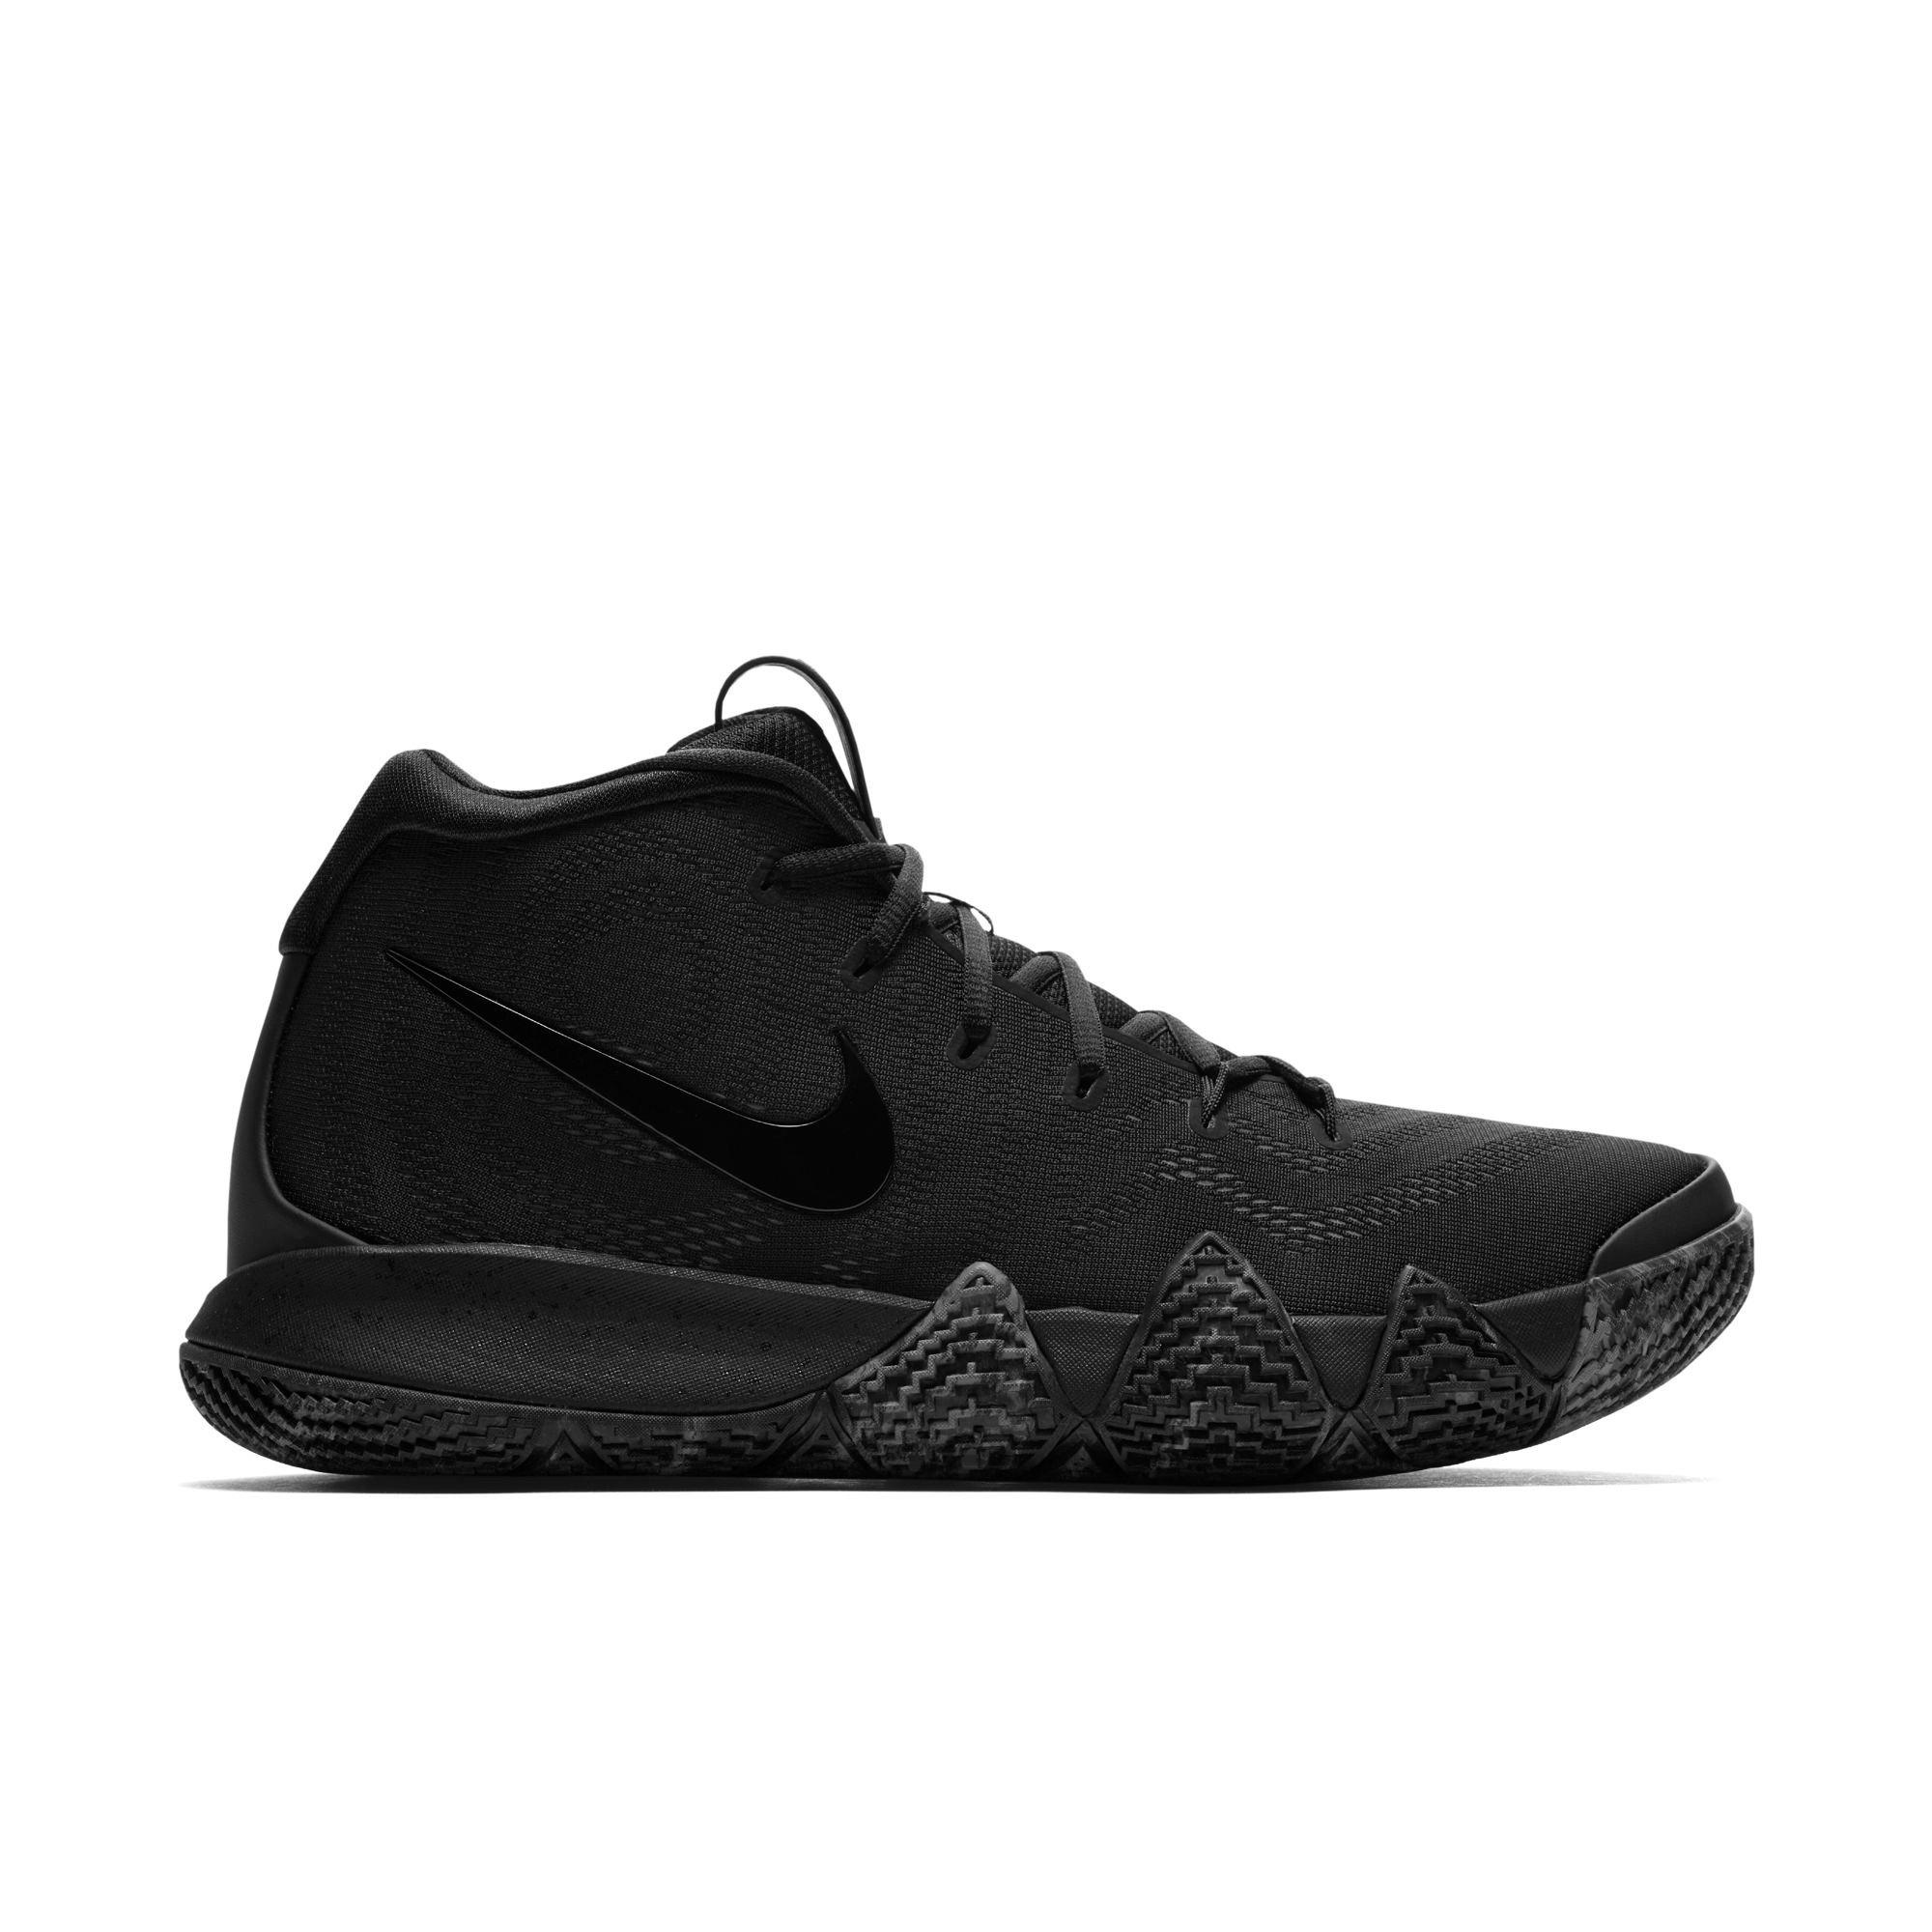 kyrie basketball shoes black